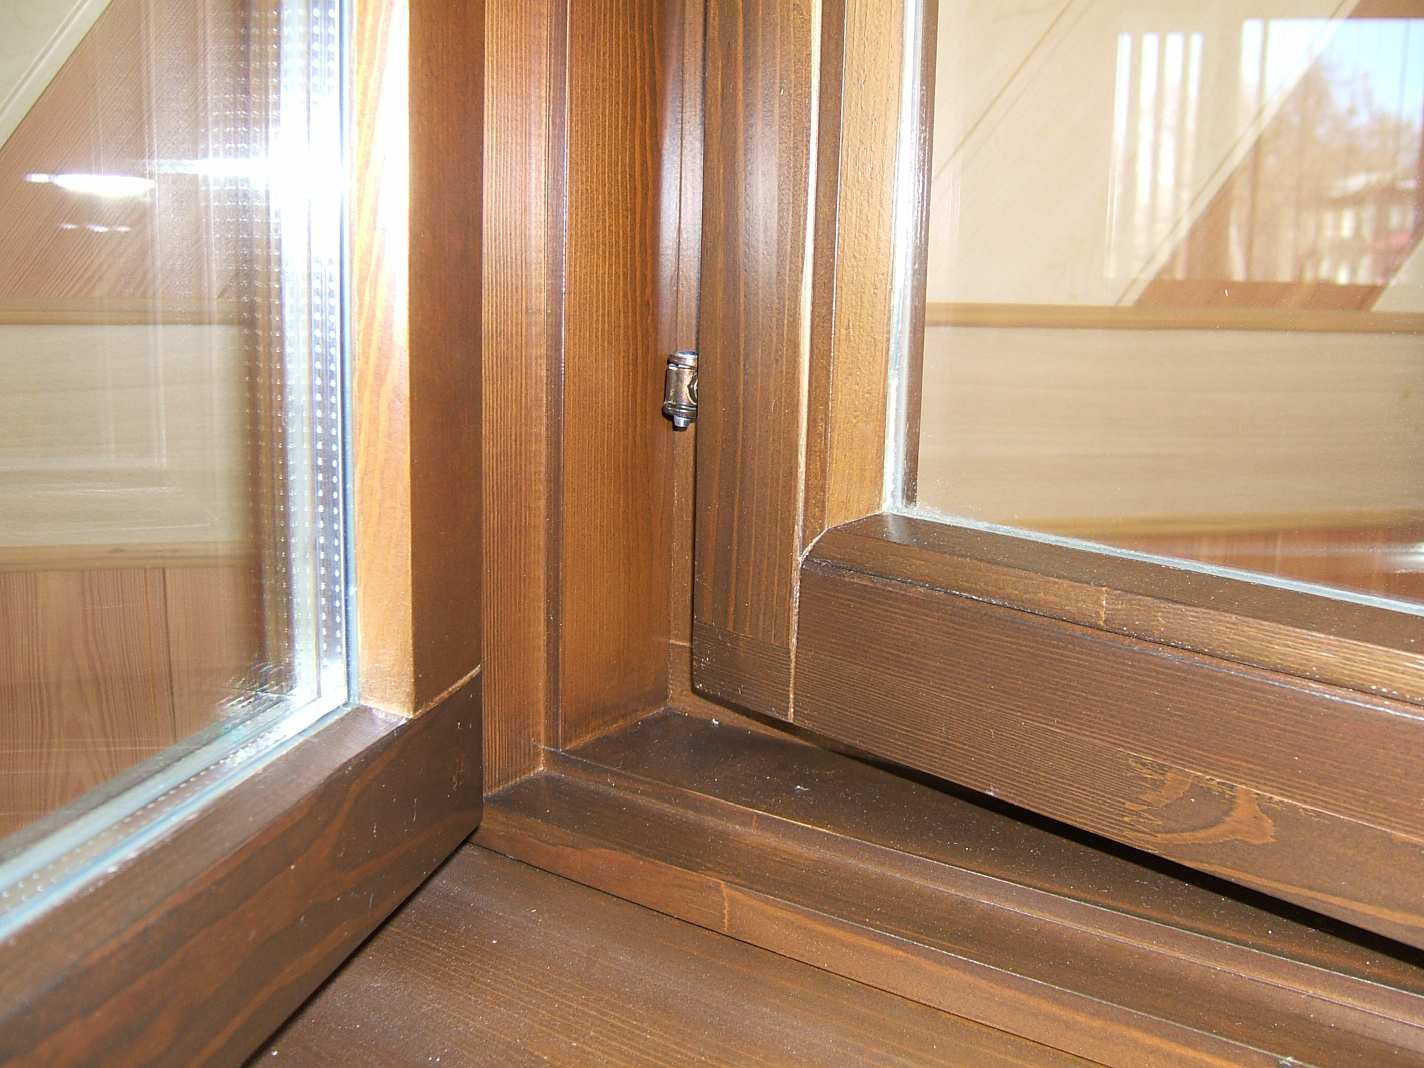 Финские деревянные окна со стеклопакетами - тепло и уют